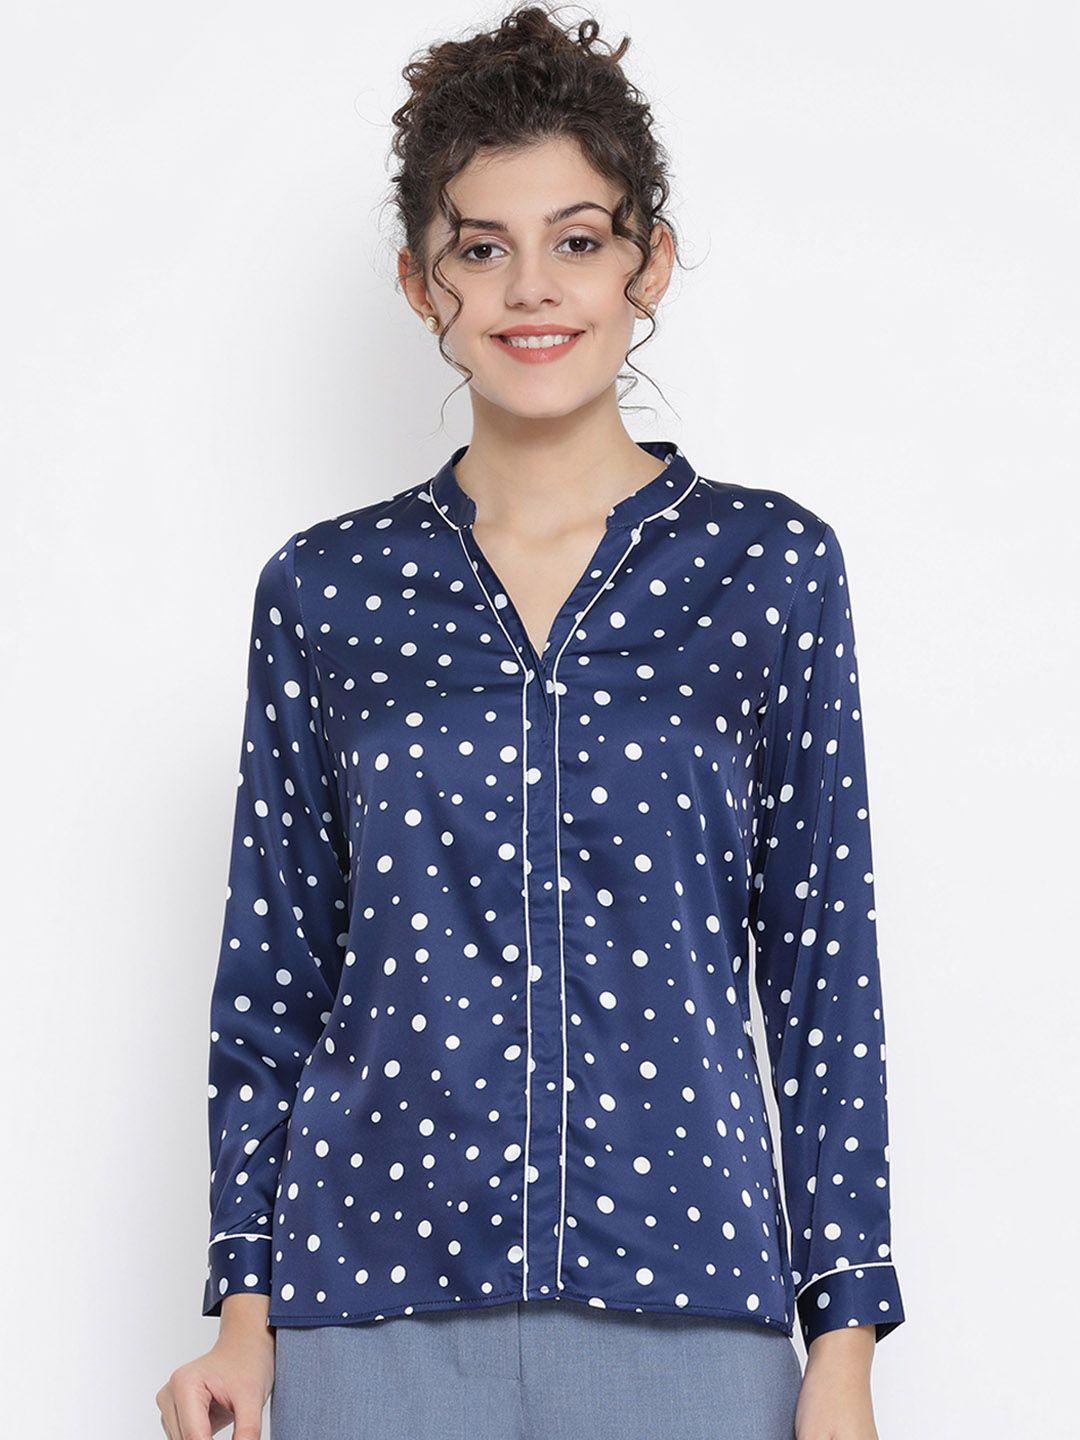 office & you women navy blue polka dot shirt style top